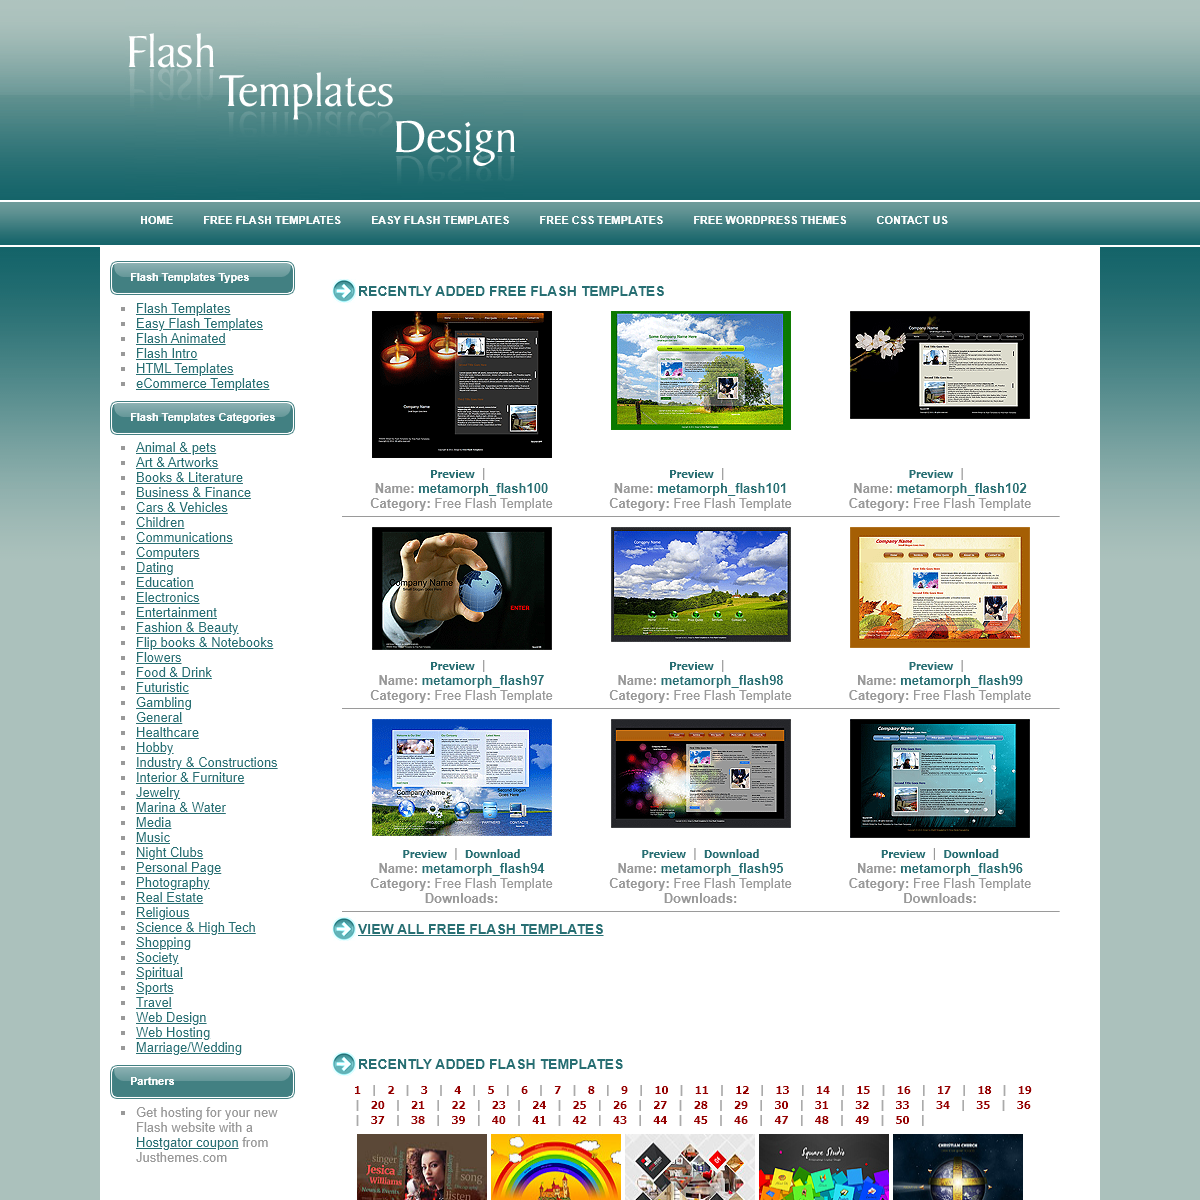 A complete backup of flashtemplatesdesign.com